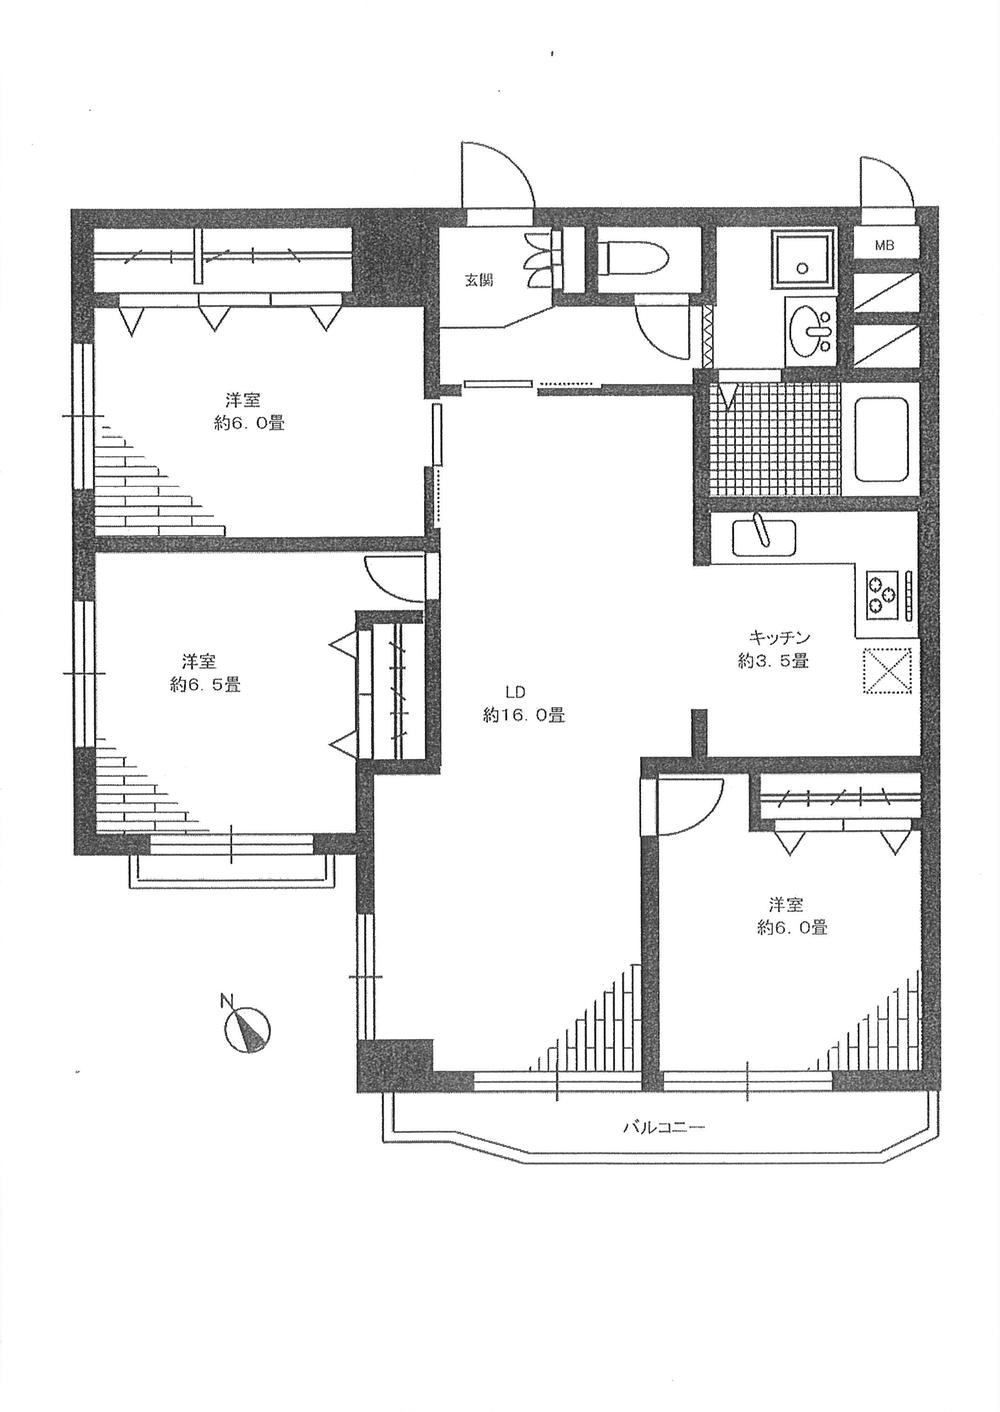 Floor plan. 3LDK, Price 25,800,000 yen, Footprint 81 sq m , Balcony area 5.5 sq m